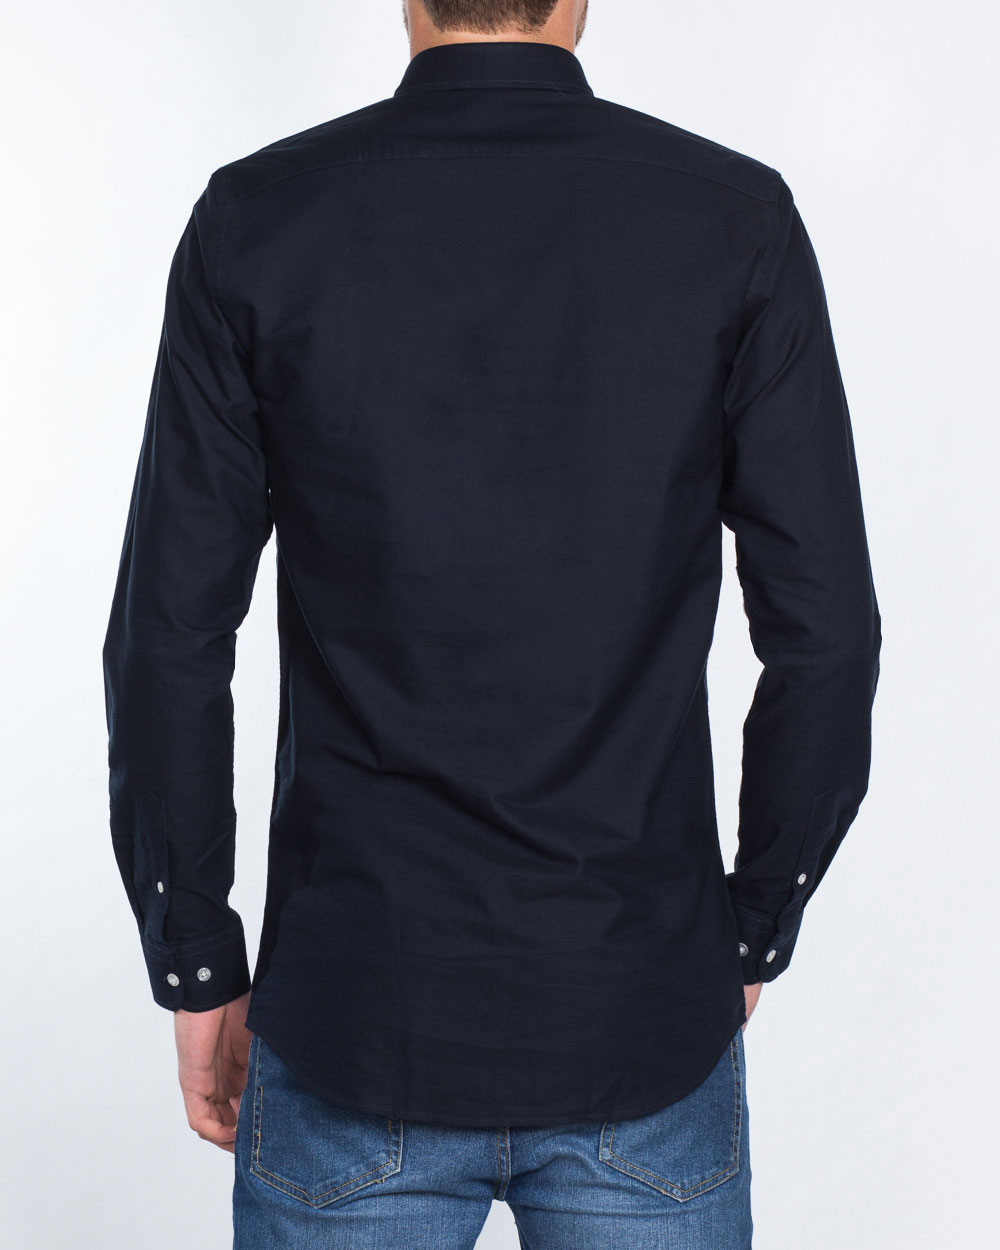 2t Slim Fit Long Sleeve Tall Shirt (plain navy) | 2tall.com